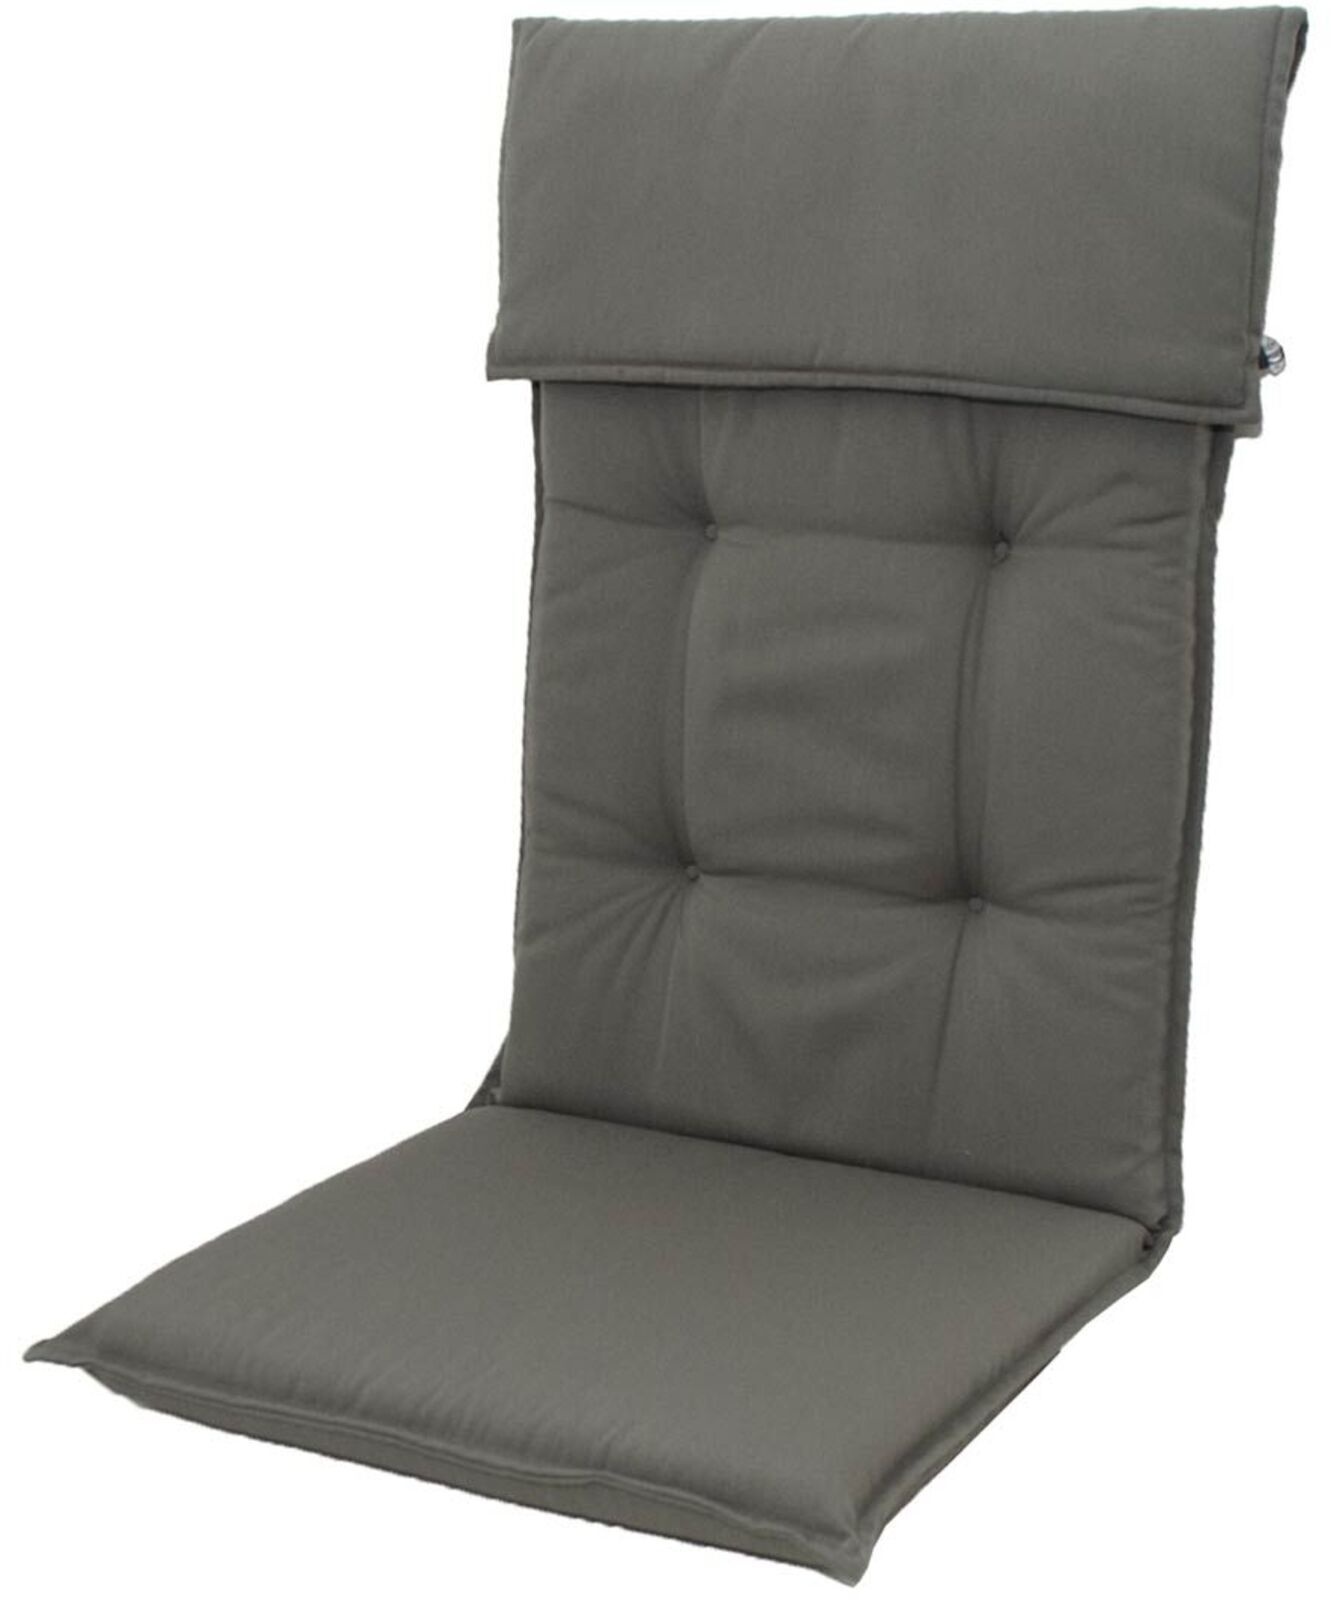 DOPPLER Stuhlauflage Hochlehner, grau, Dralon, 120x50x7cm, mit DuPont Teflon Markenimprägnierung